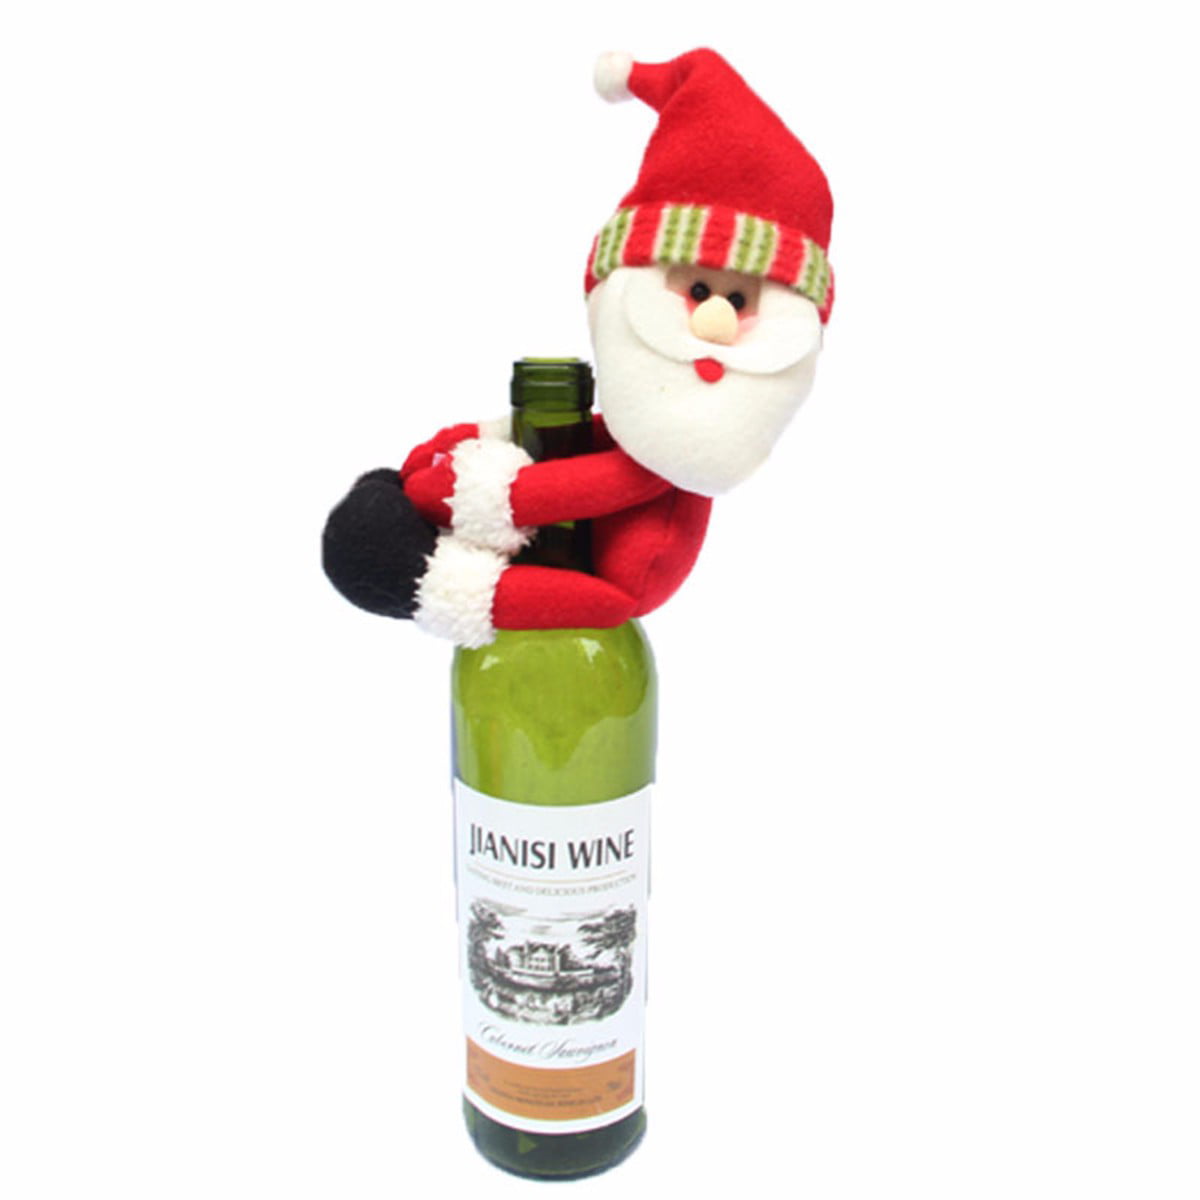 Christmas Santa Snowman Elf Wine Bottle Cover Table Party Decor Xmas Ornaments # 